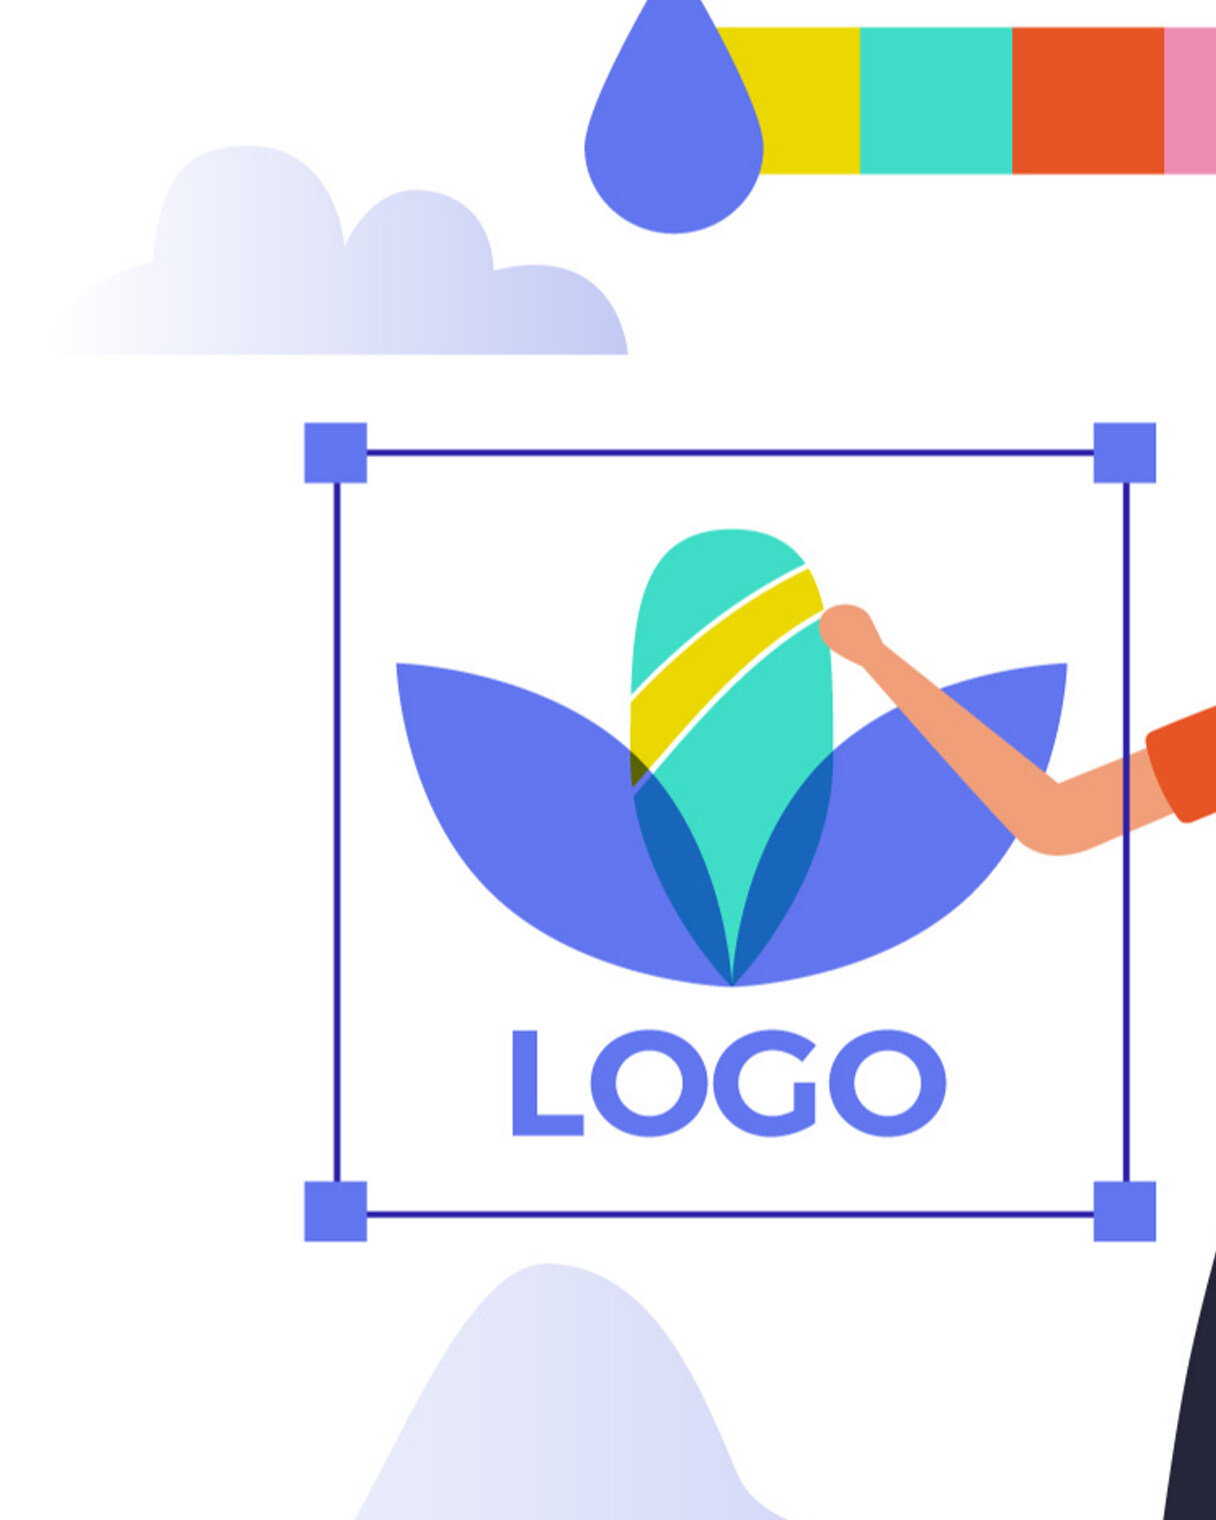 Logo Design, Graphic Elements, Typography & Color